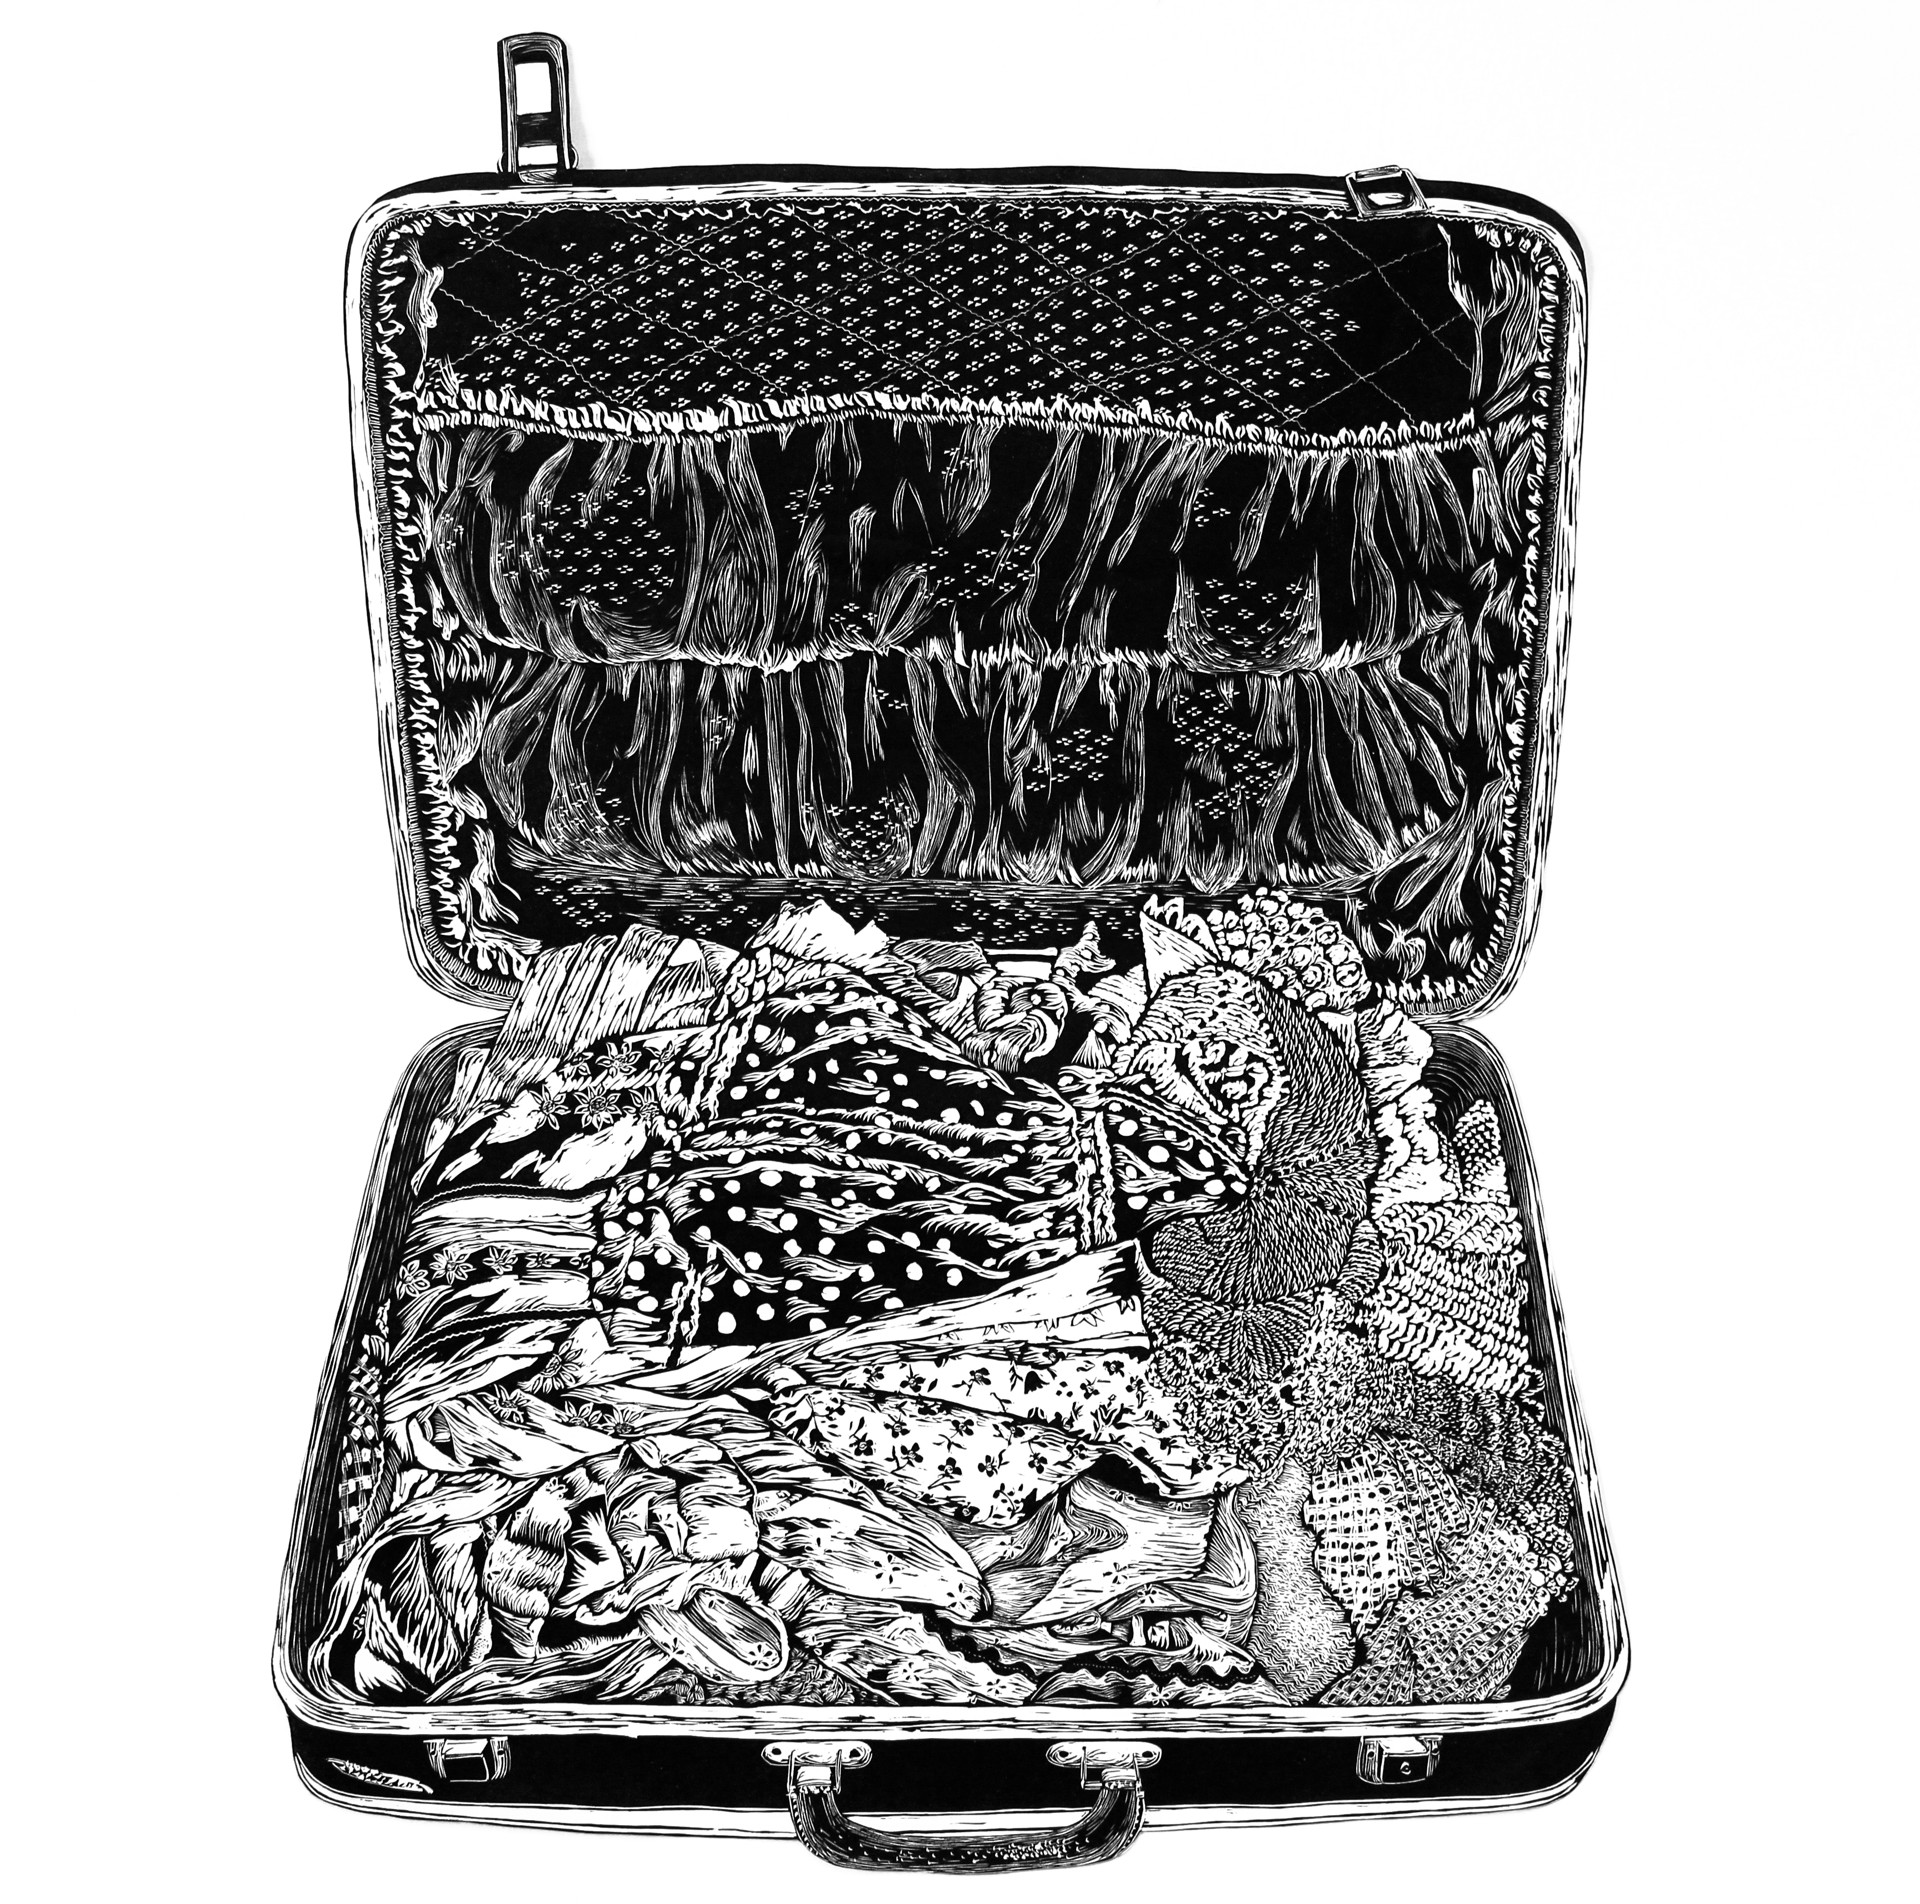 Suitcase of Keepsakes by Masy Chighizola